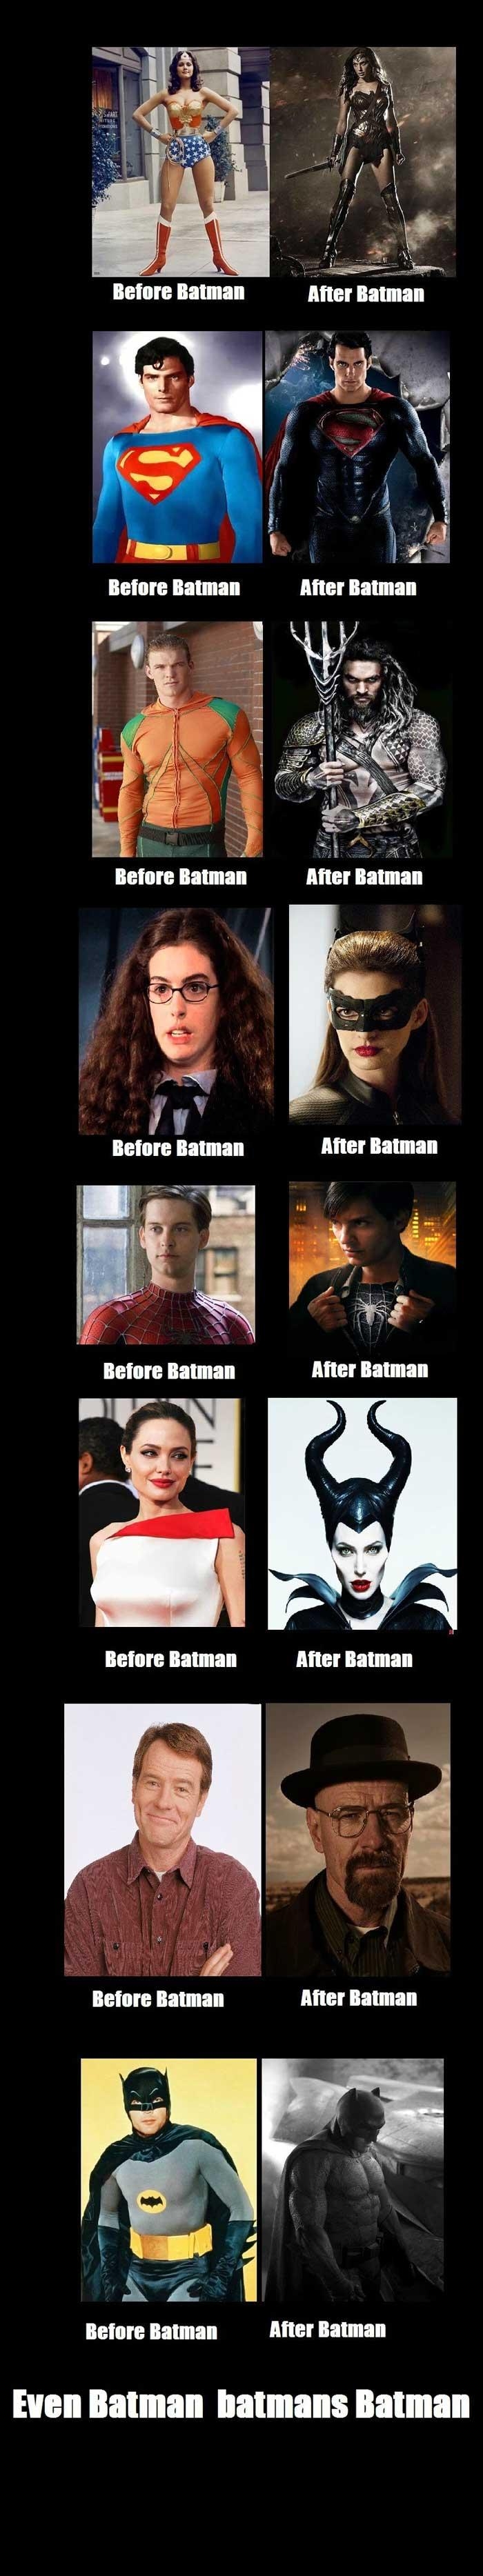 Before Batman